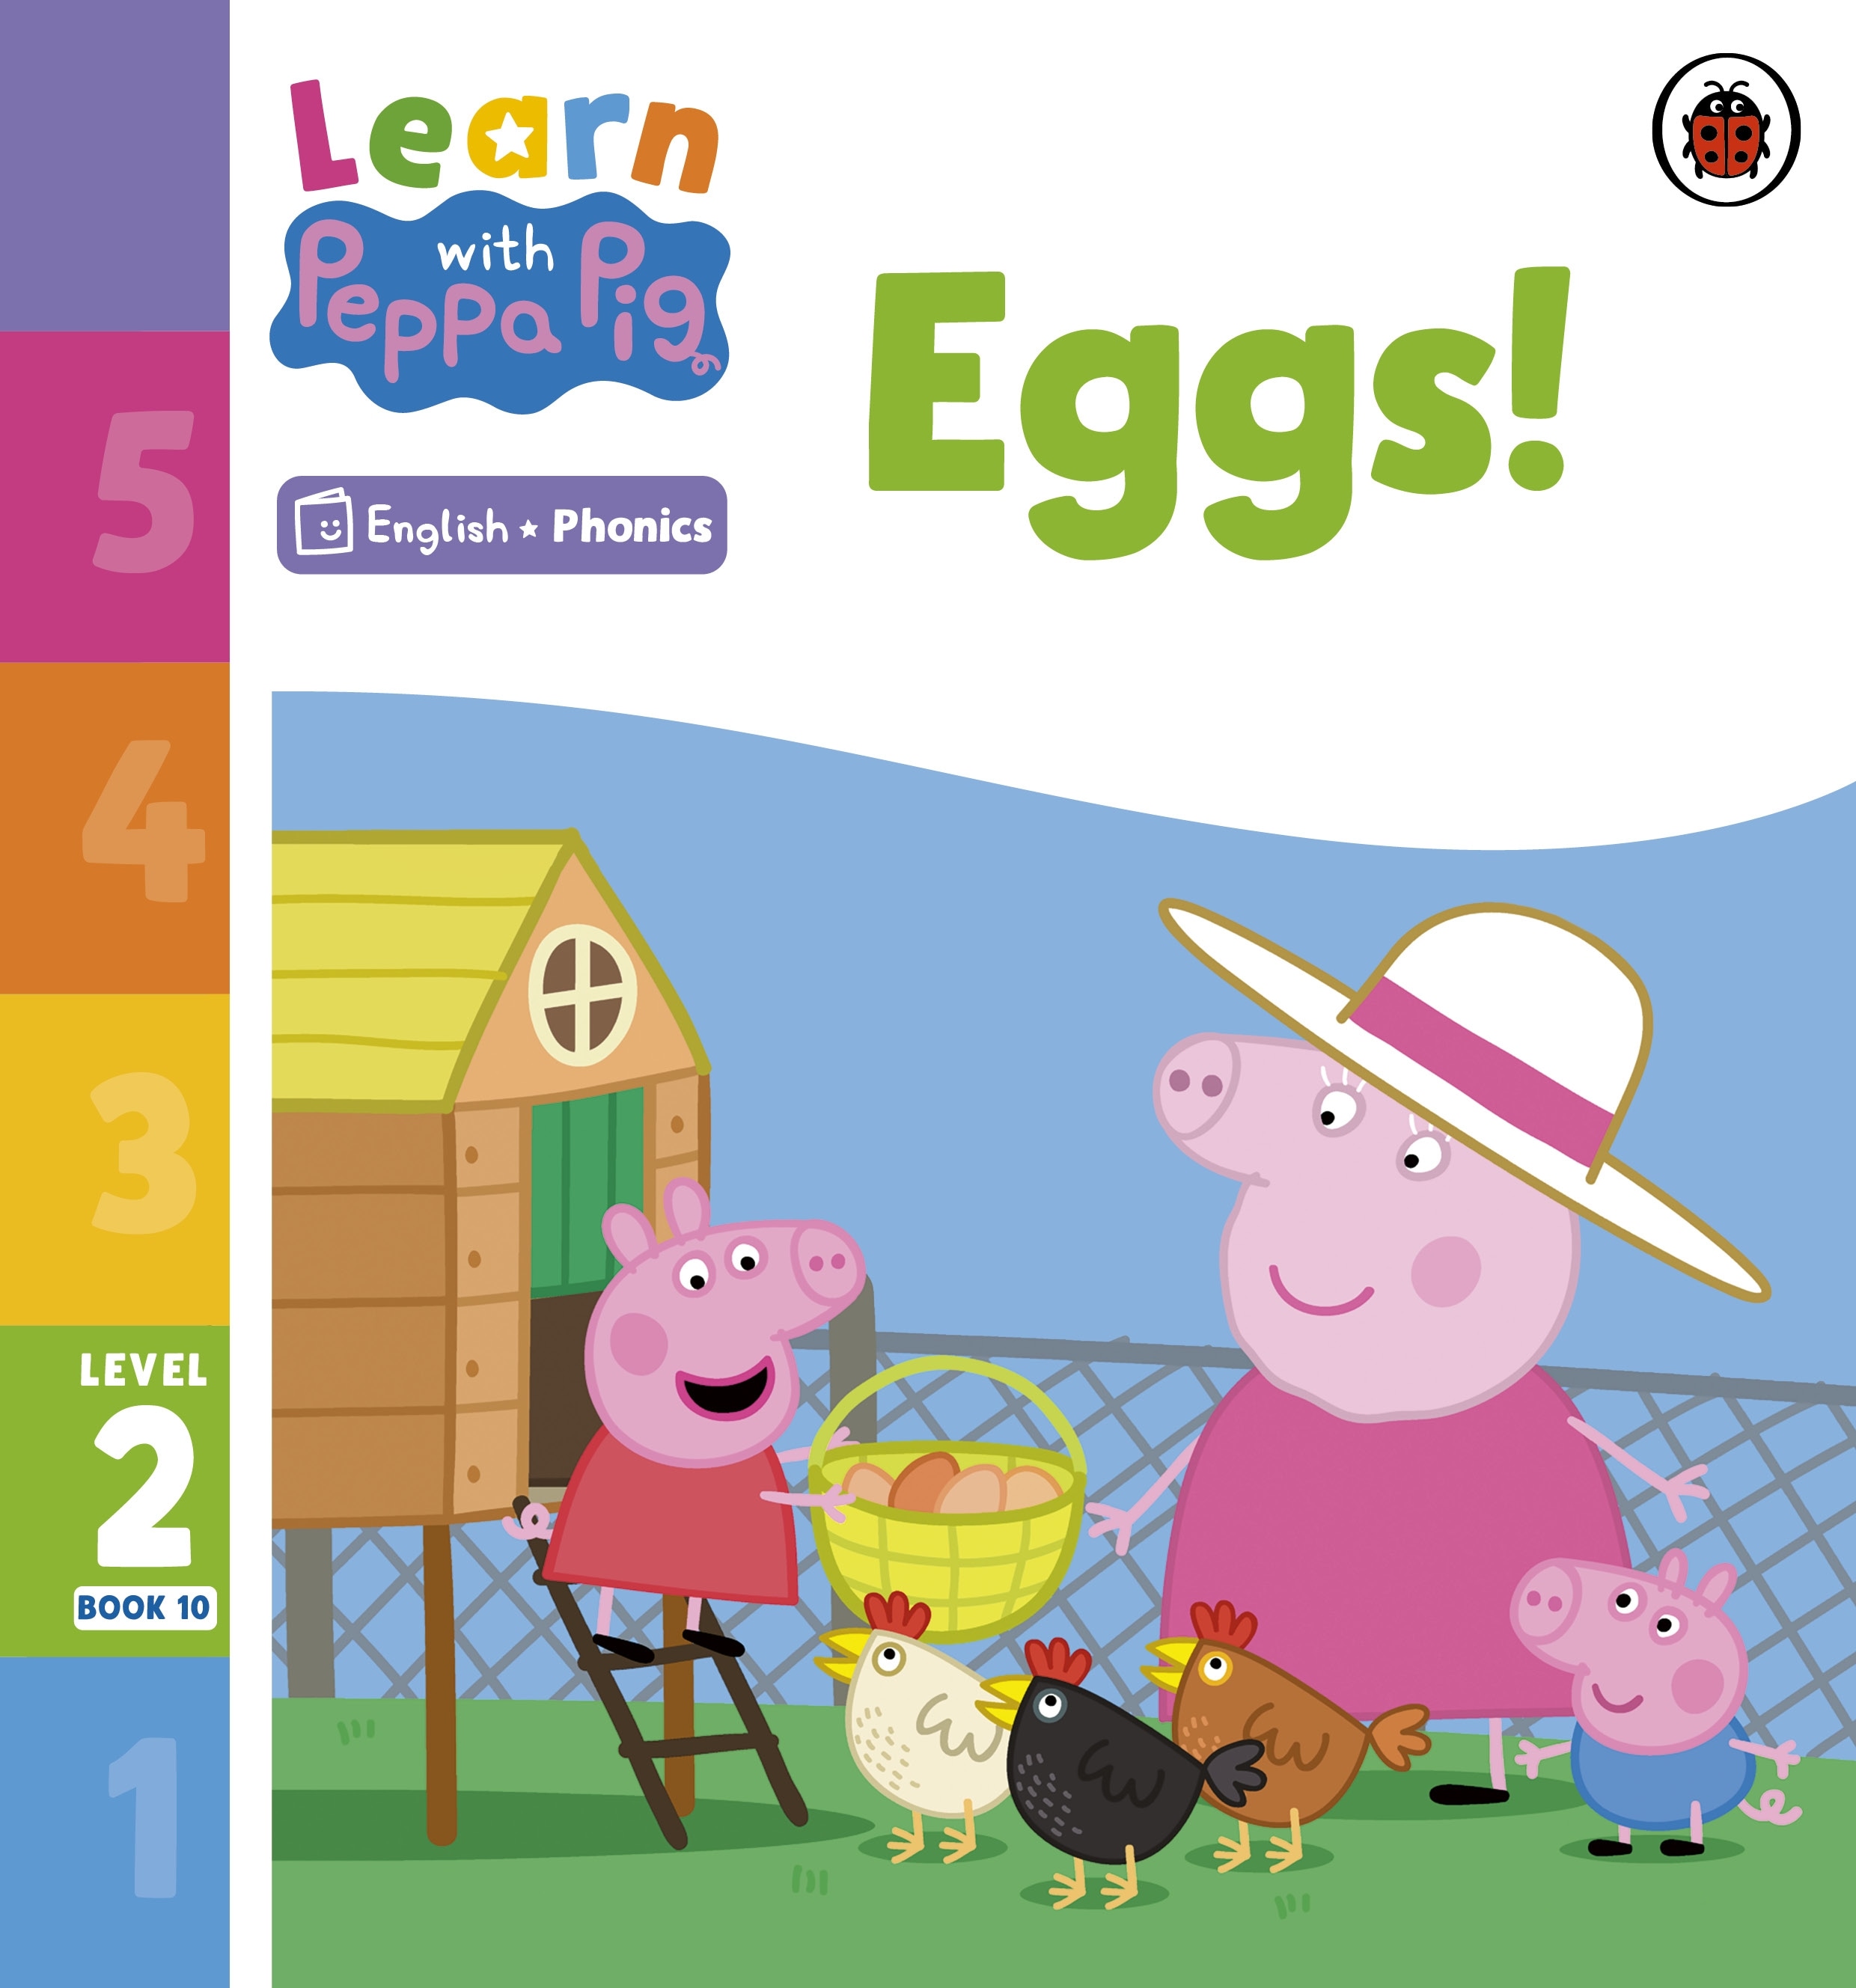 Learn with Peppa Phonics Level 2 Book 10 — Eggs! (Phonics Reader)